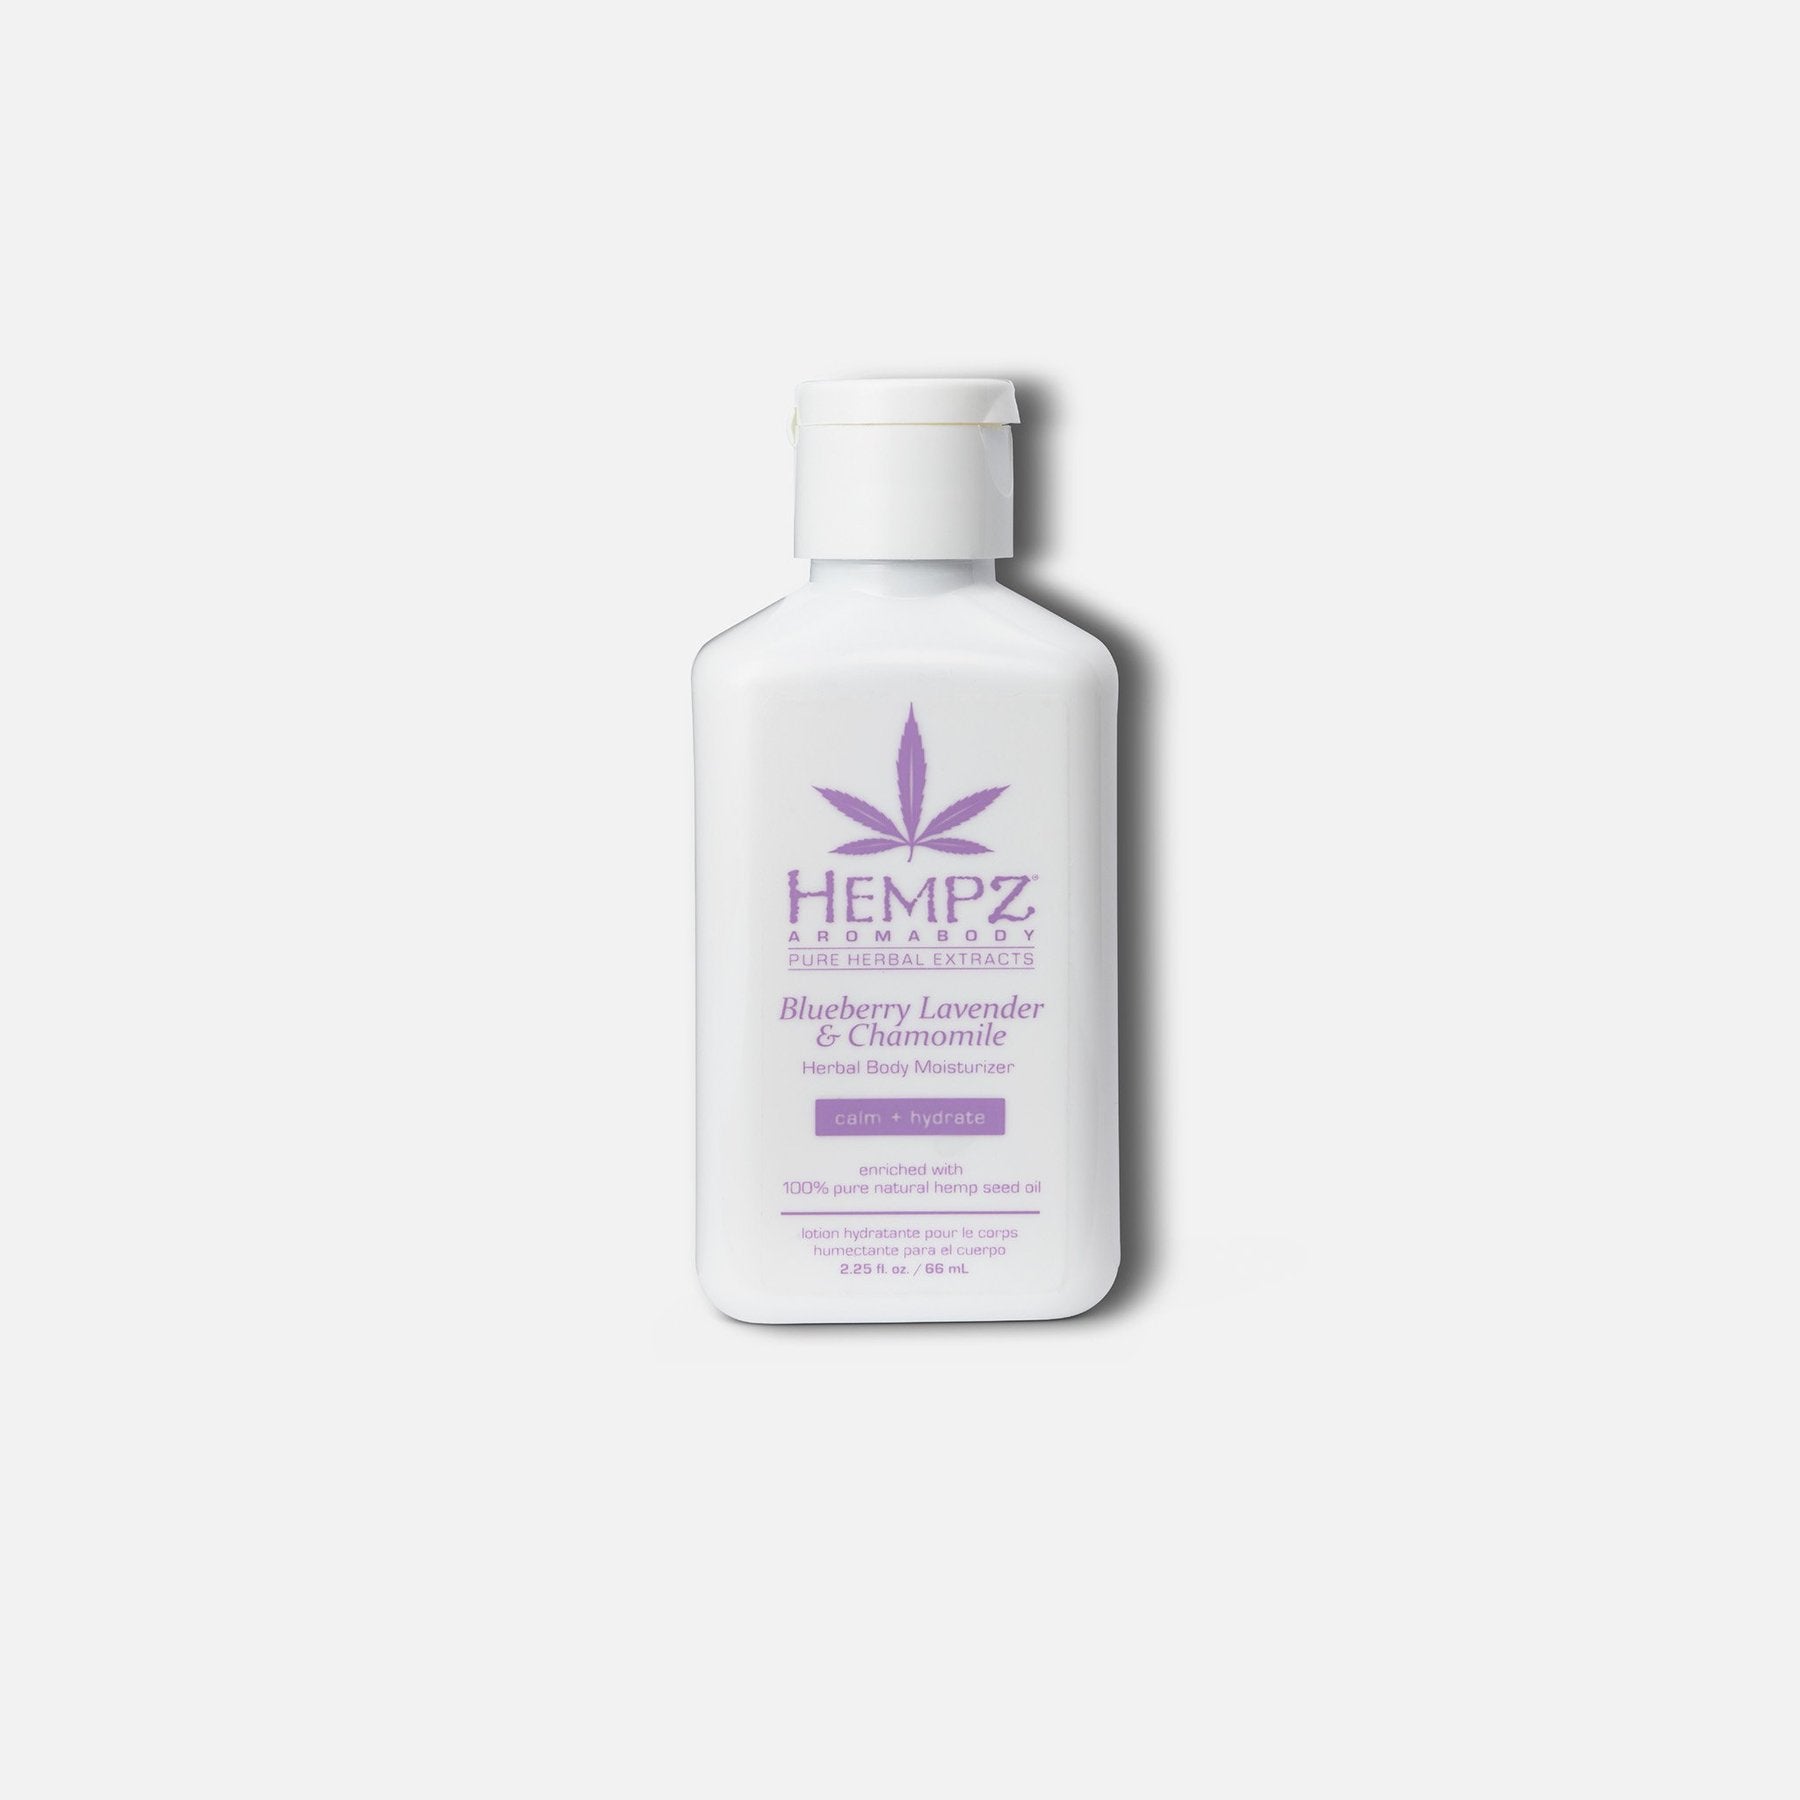 Hempz AromaBody Blueberry Lavender & Chamomile Herbal Body Moisturizer - 2 Sizes